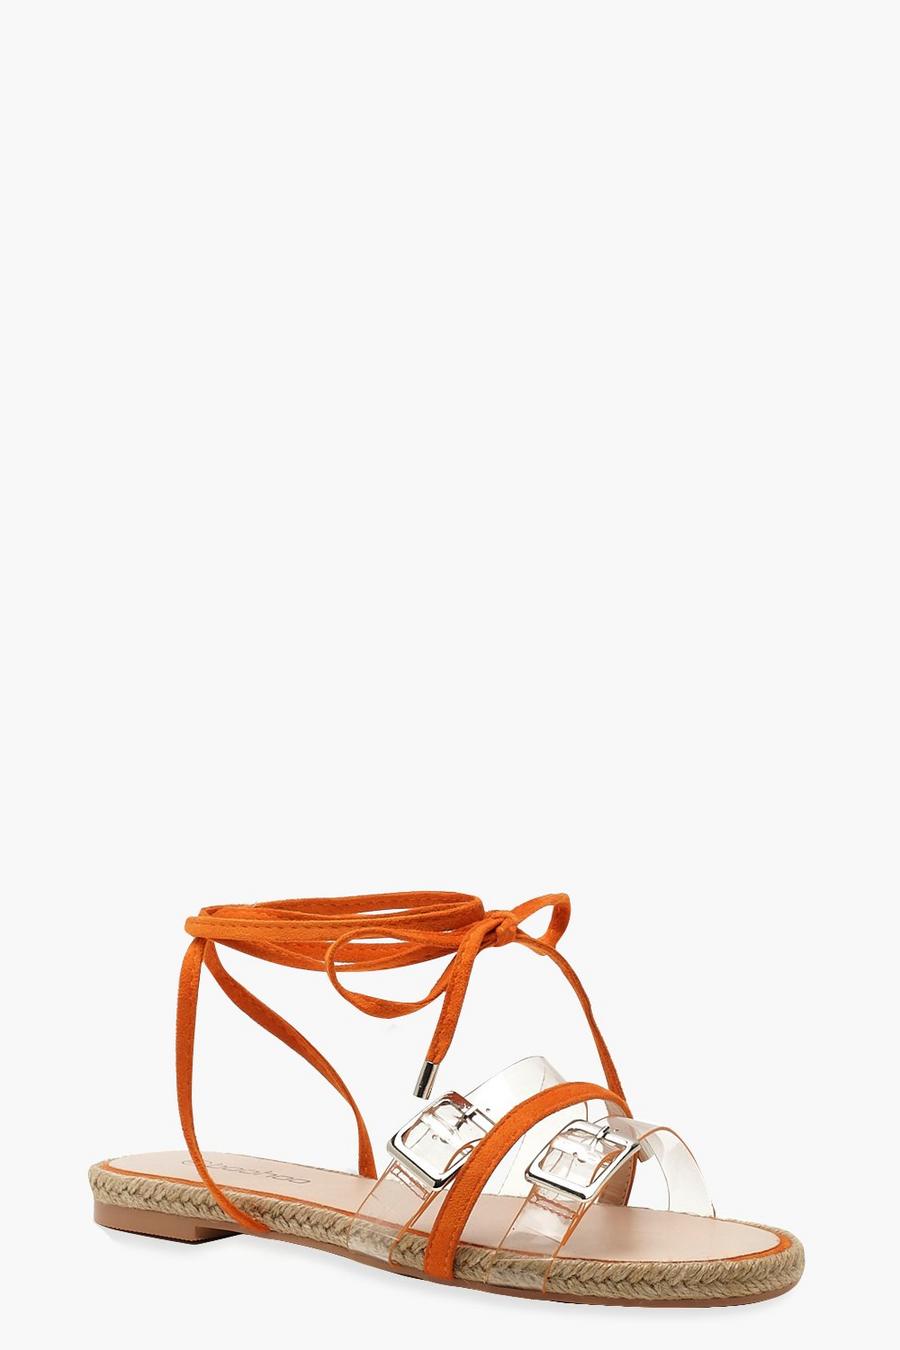 Sandalias estilo alpargata con tiras transparentes cruzadas, Naranja image number 1